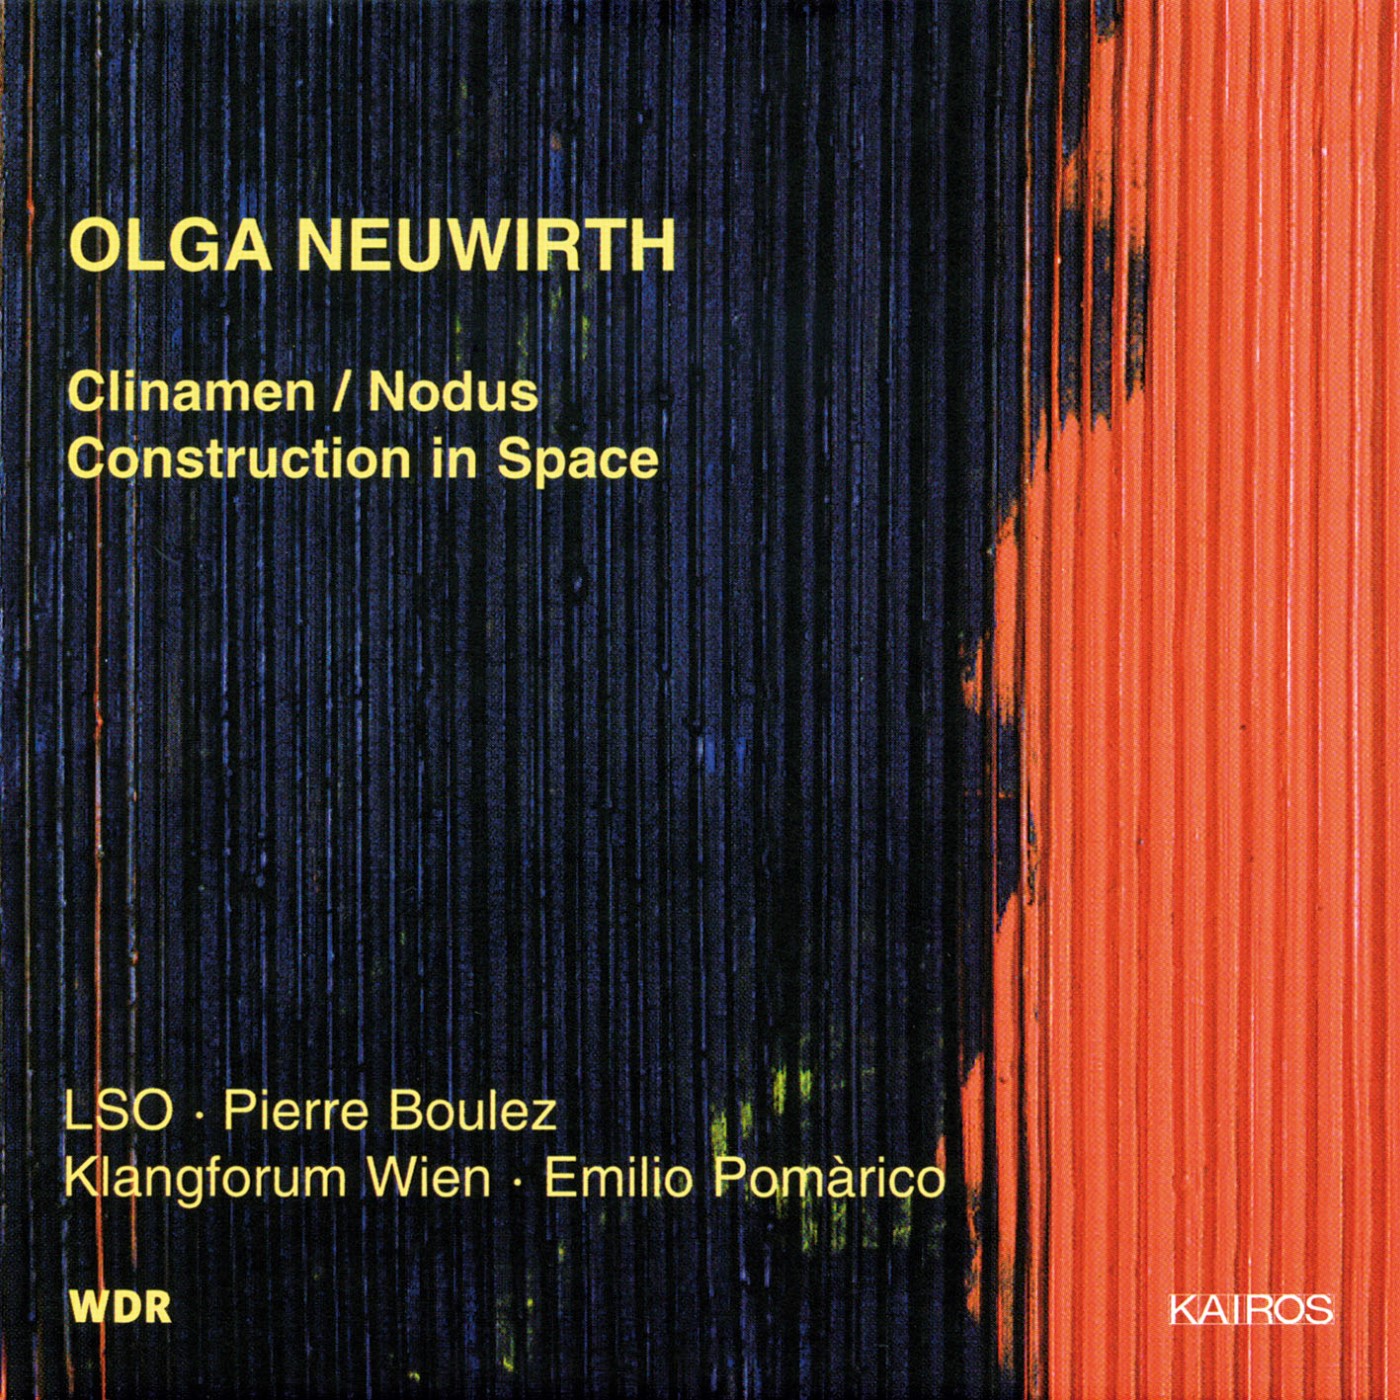 Olga Neuwirth: Chamber Music - Album by Olga Neuwirth